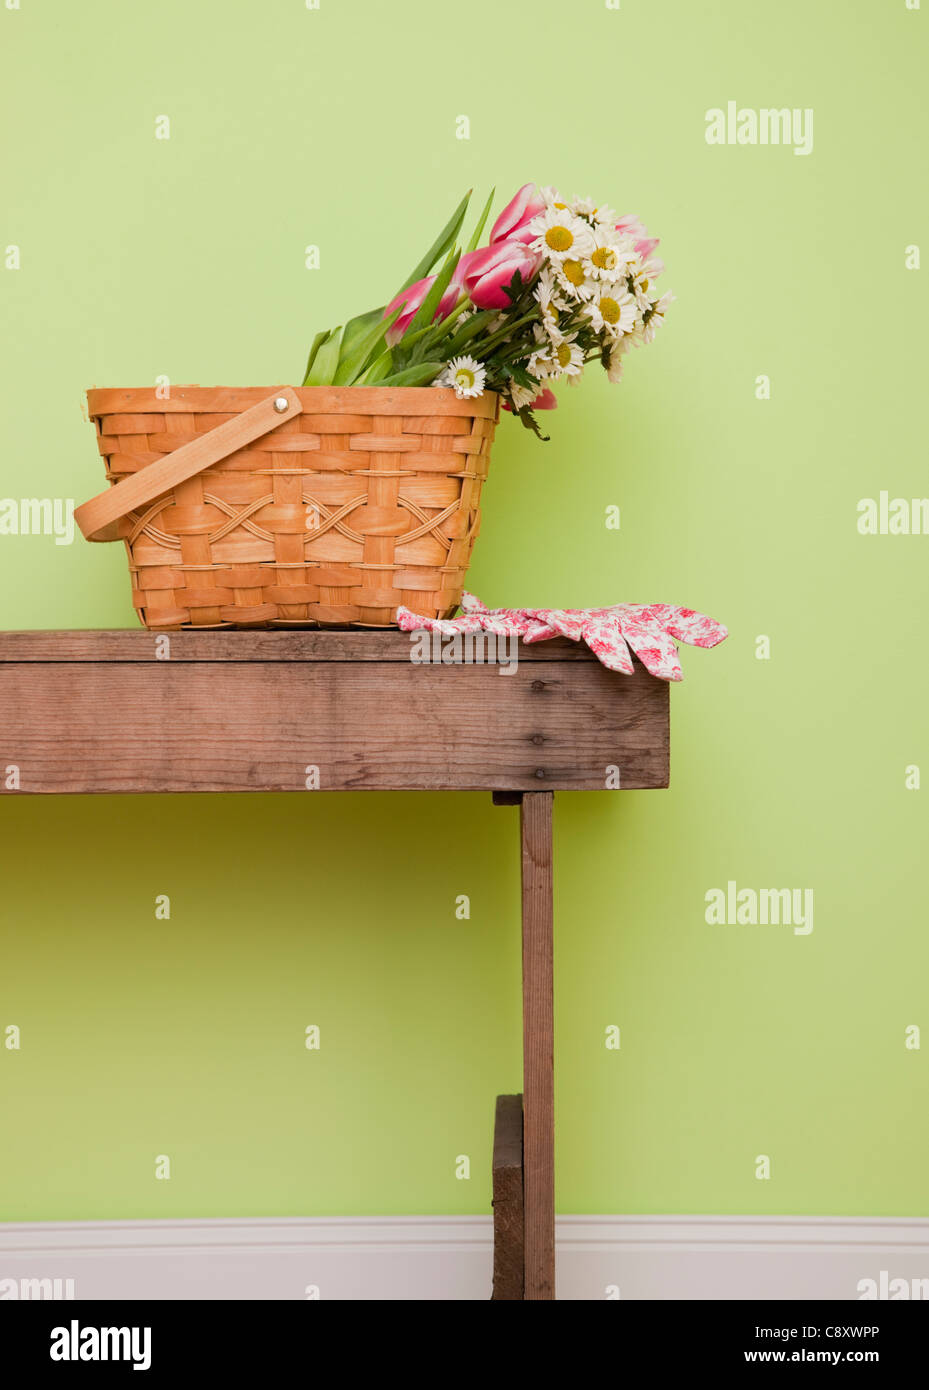 USA, Illinois, Metamora, Wildflowers in basket on table Stock Photo